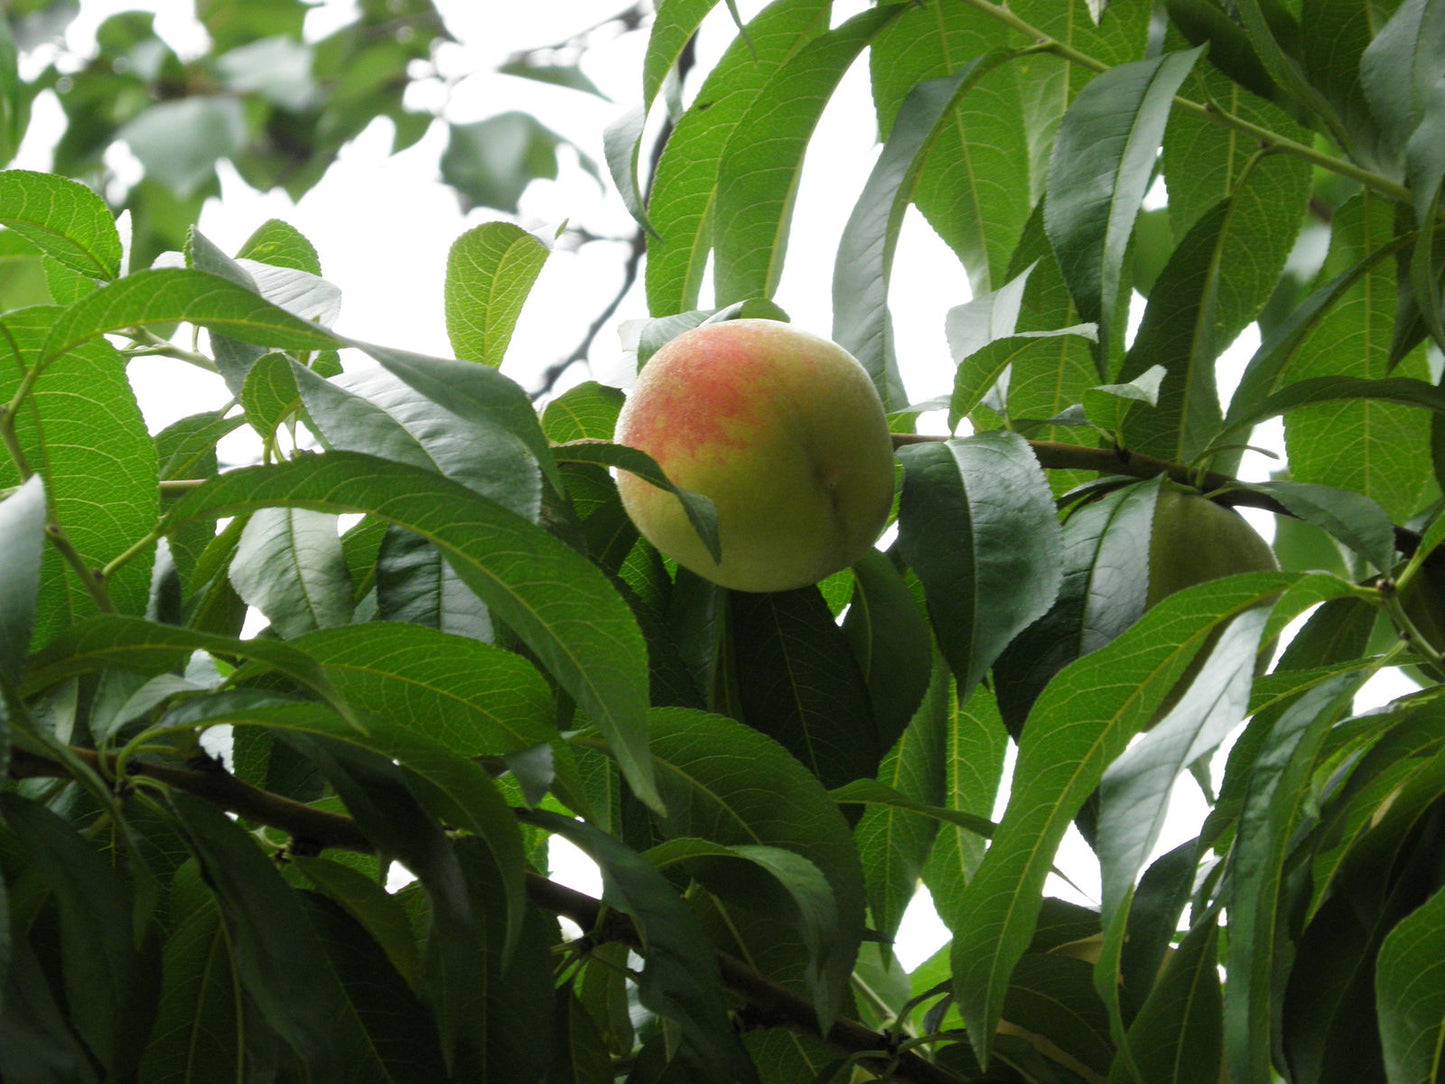 Lovell Peach (Prunus persica var. Lovell)